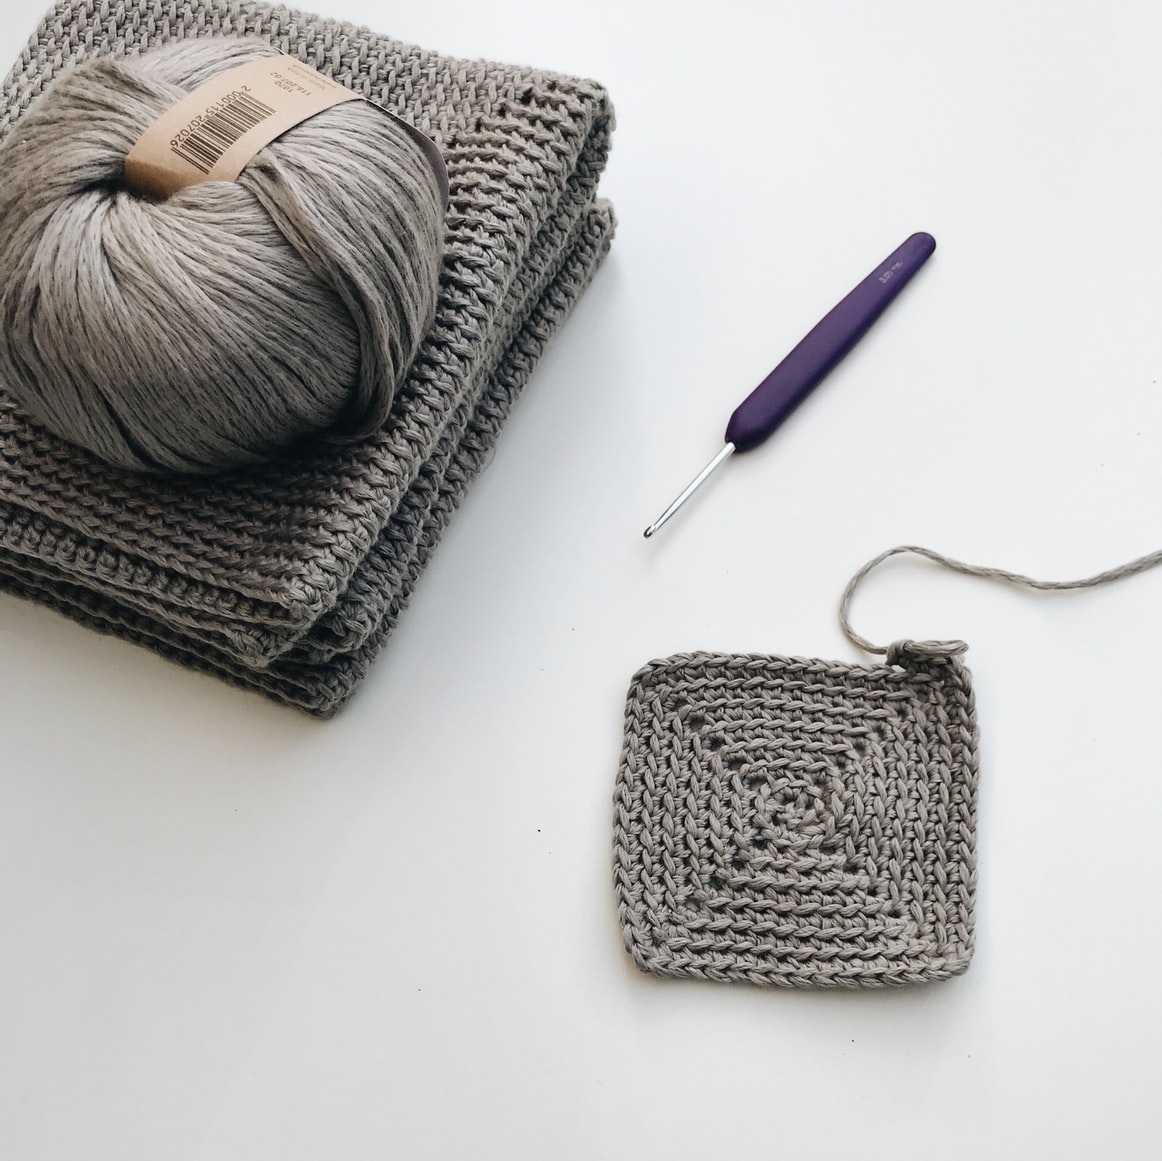 crochet materials